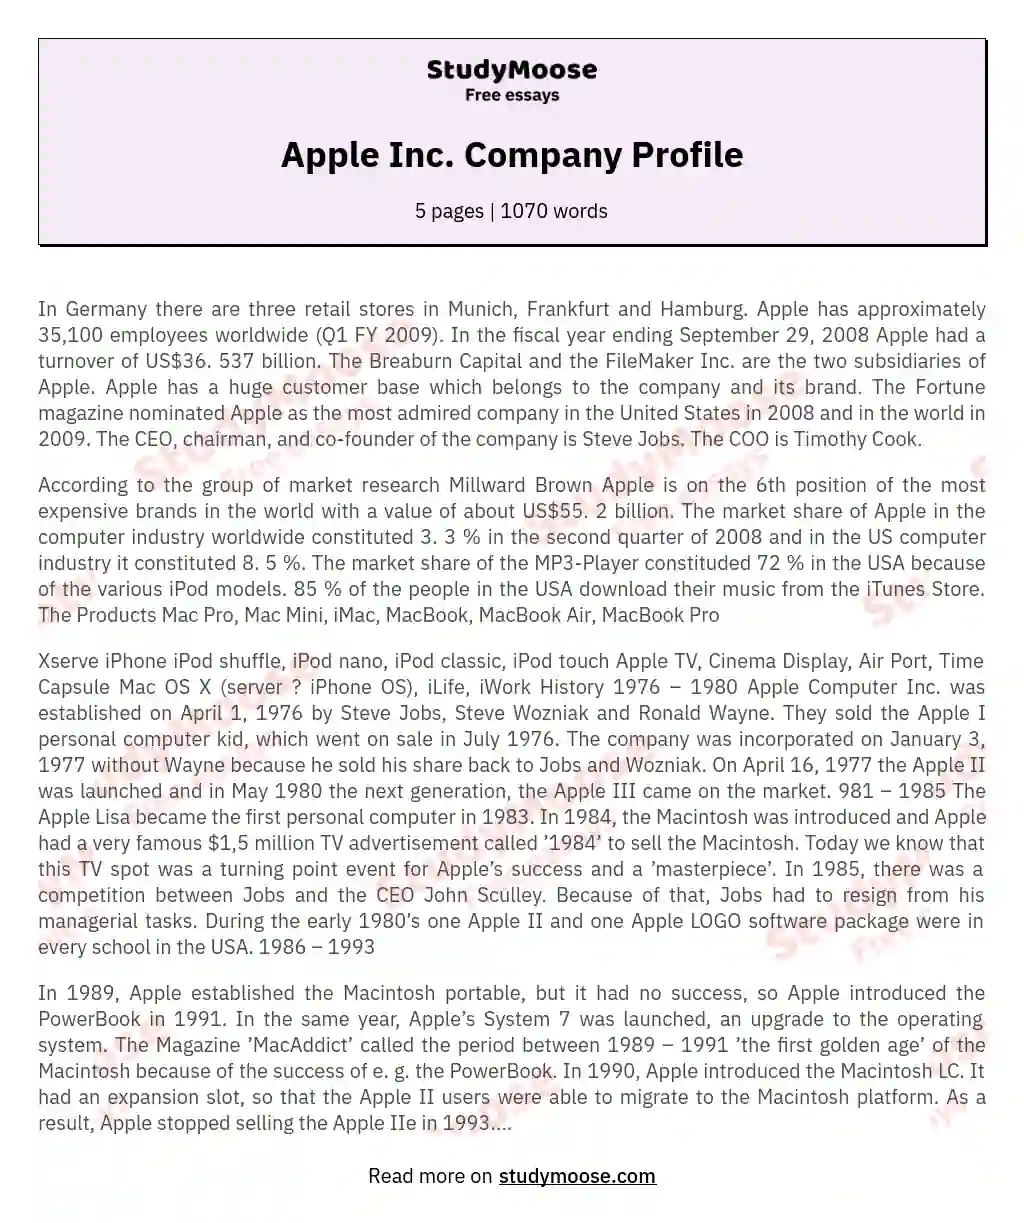 Apple Inc. Company Profile essay